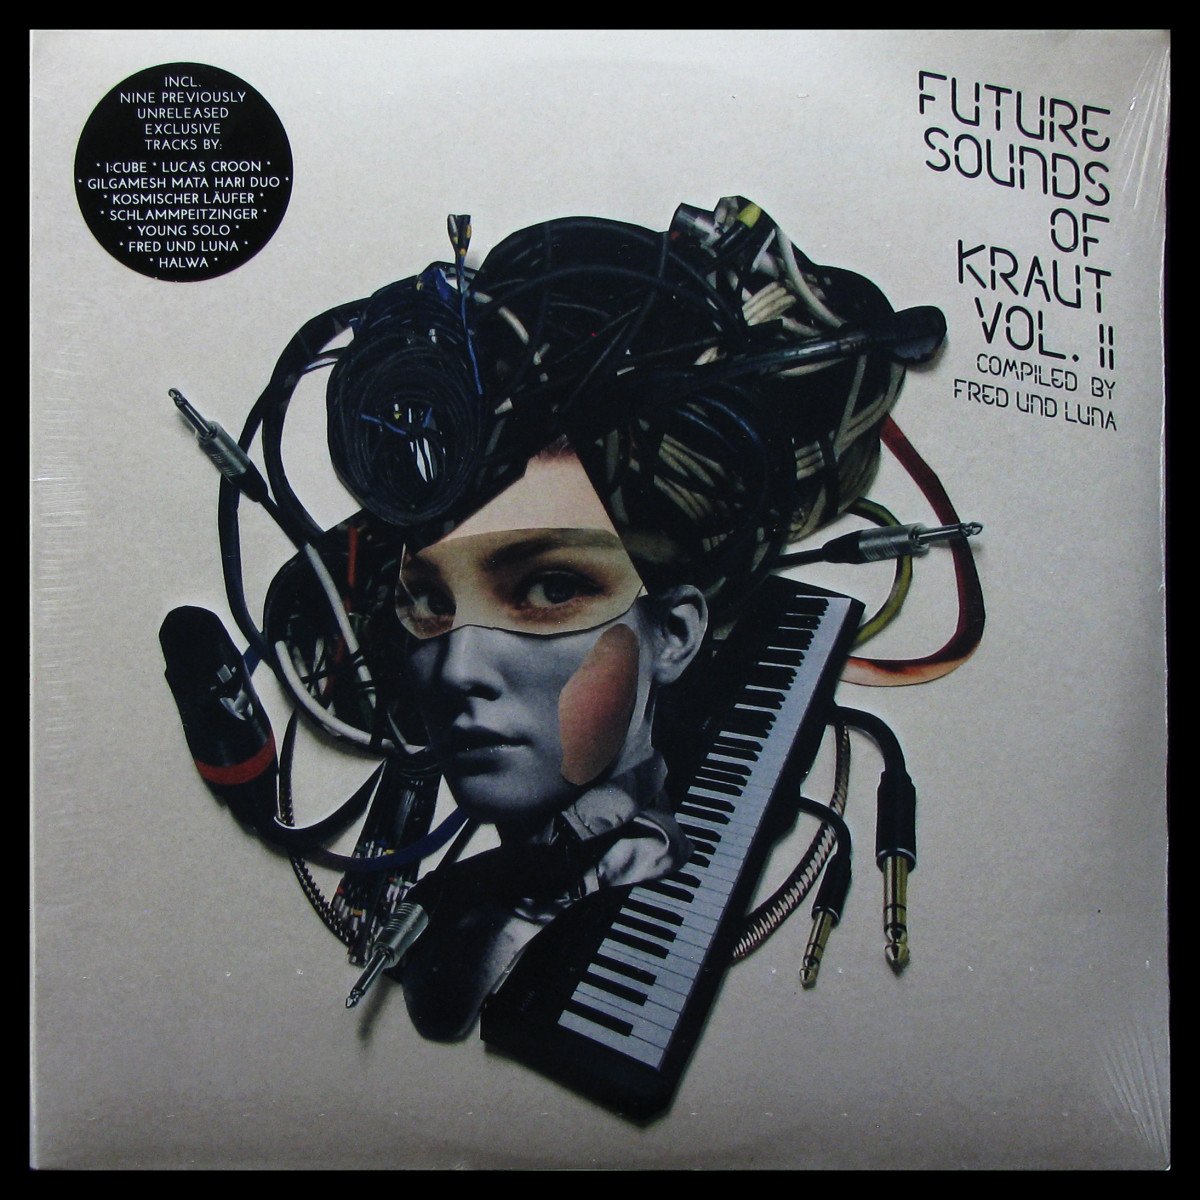 Future Sounds Of Kraut Vol. II